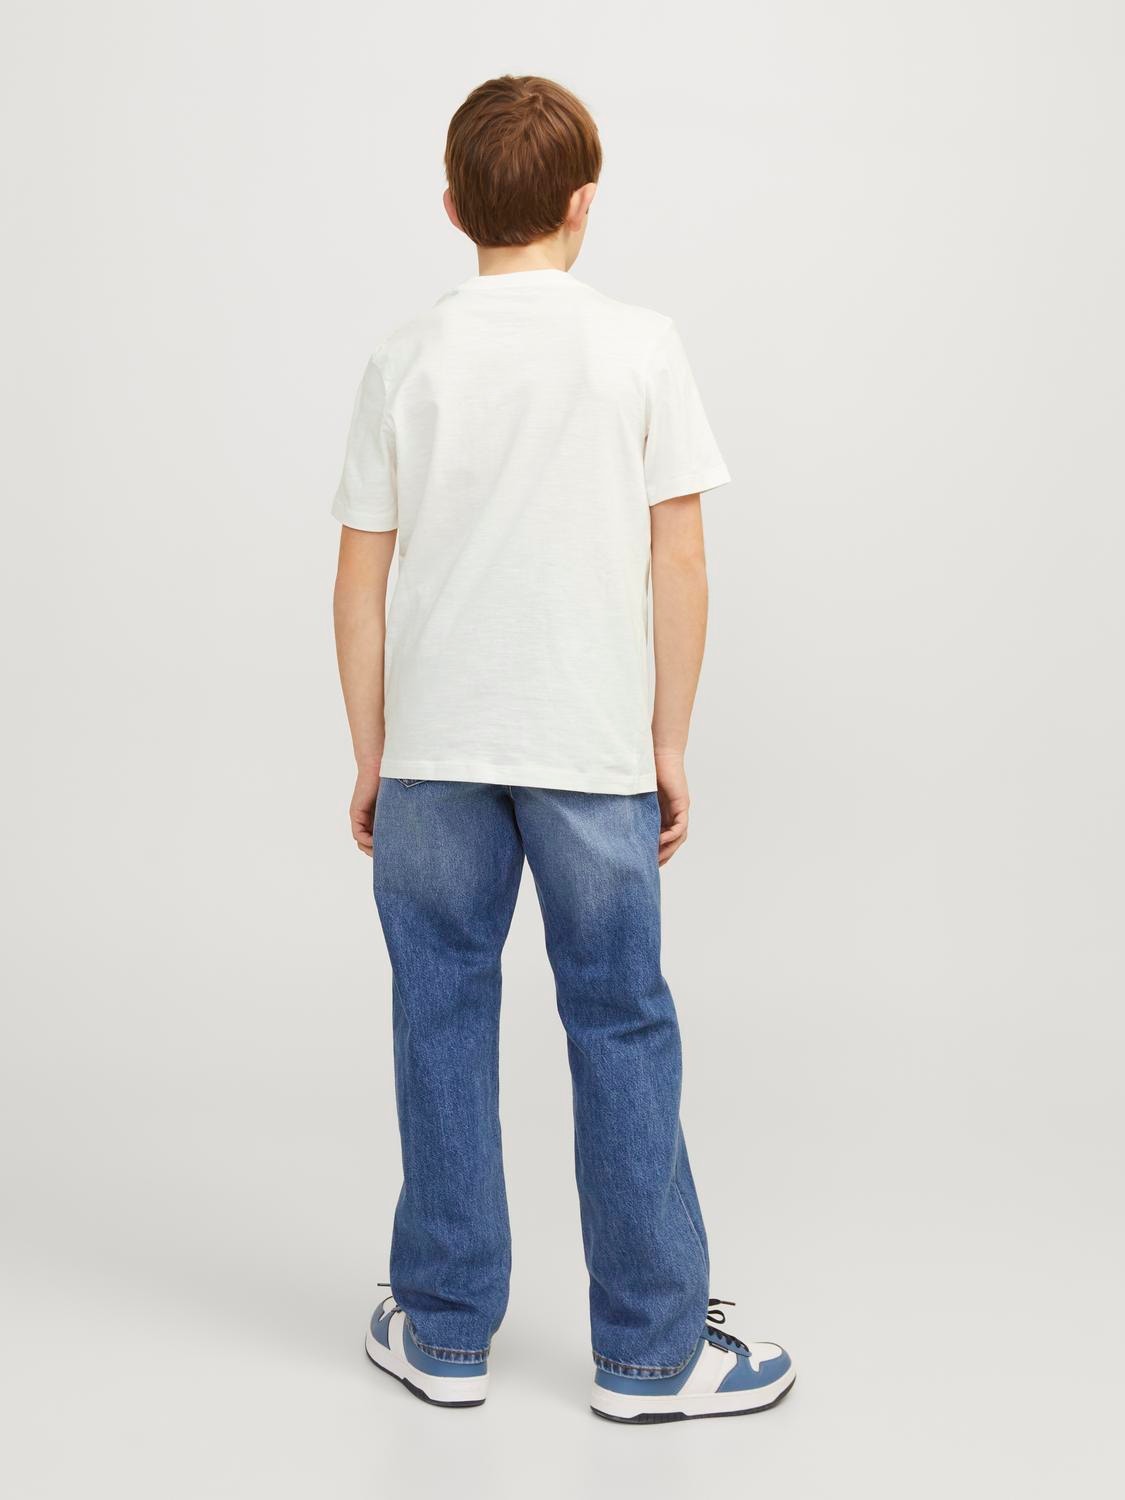 Jack & Jones T-shirt Estampar Para meninos -Cloud Dancer - 12253977